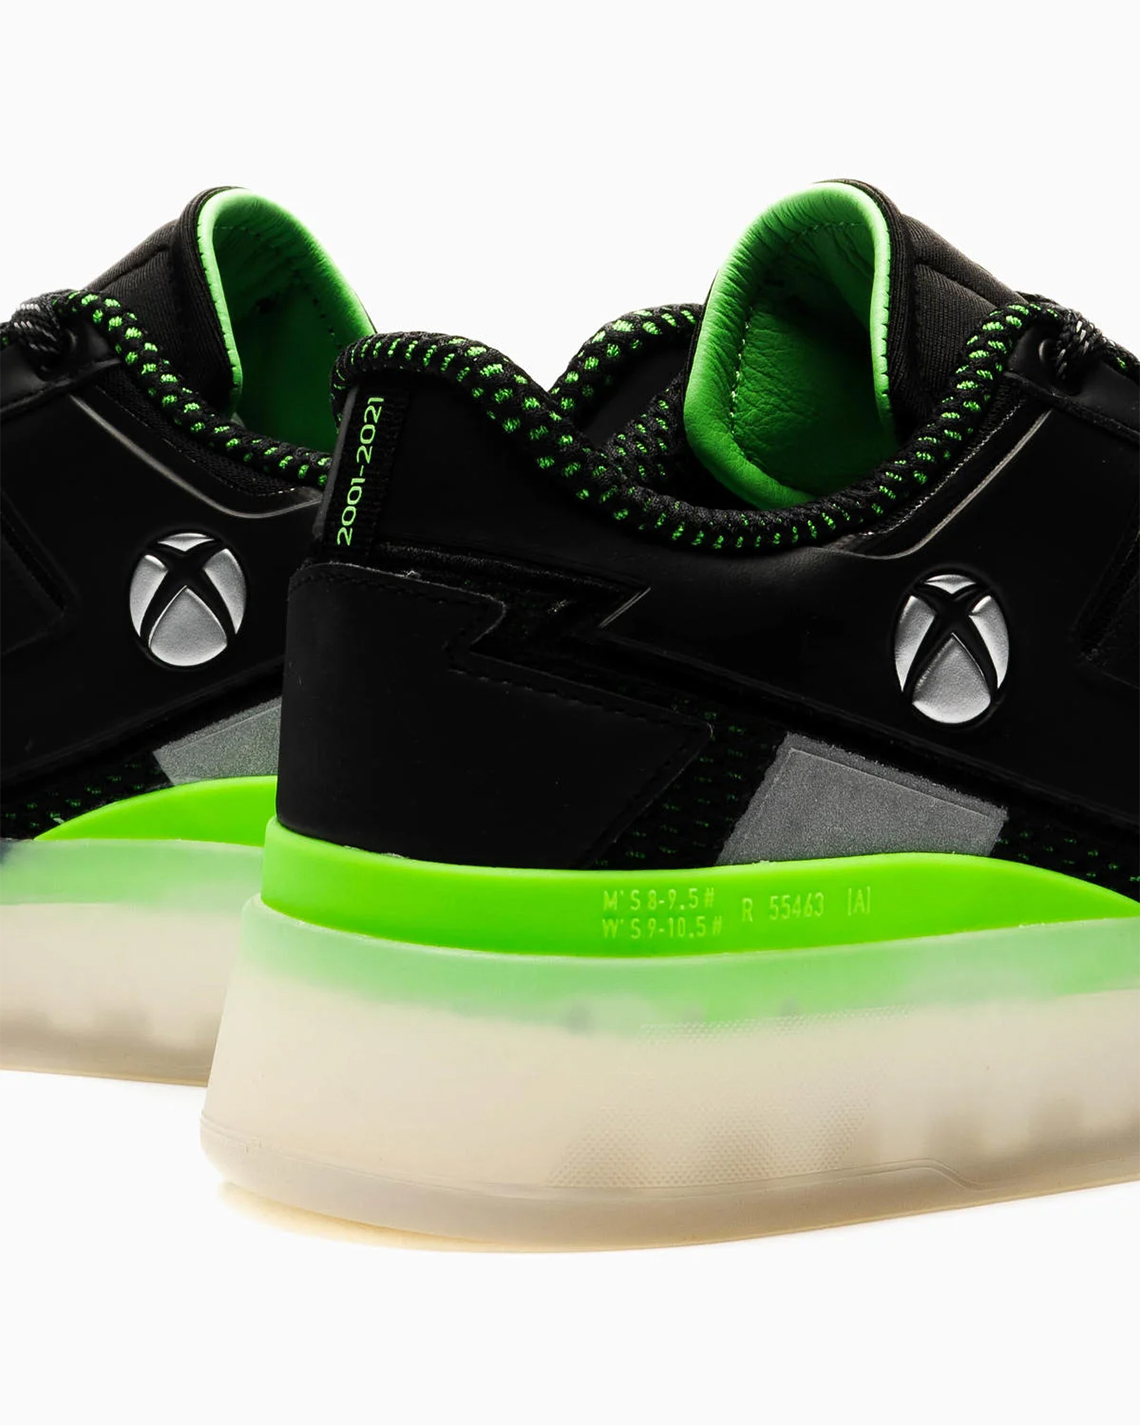 Xbox Seriesx Adidas Forum Tech Boost Gw6374 Release Date 4